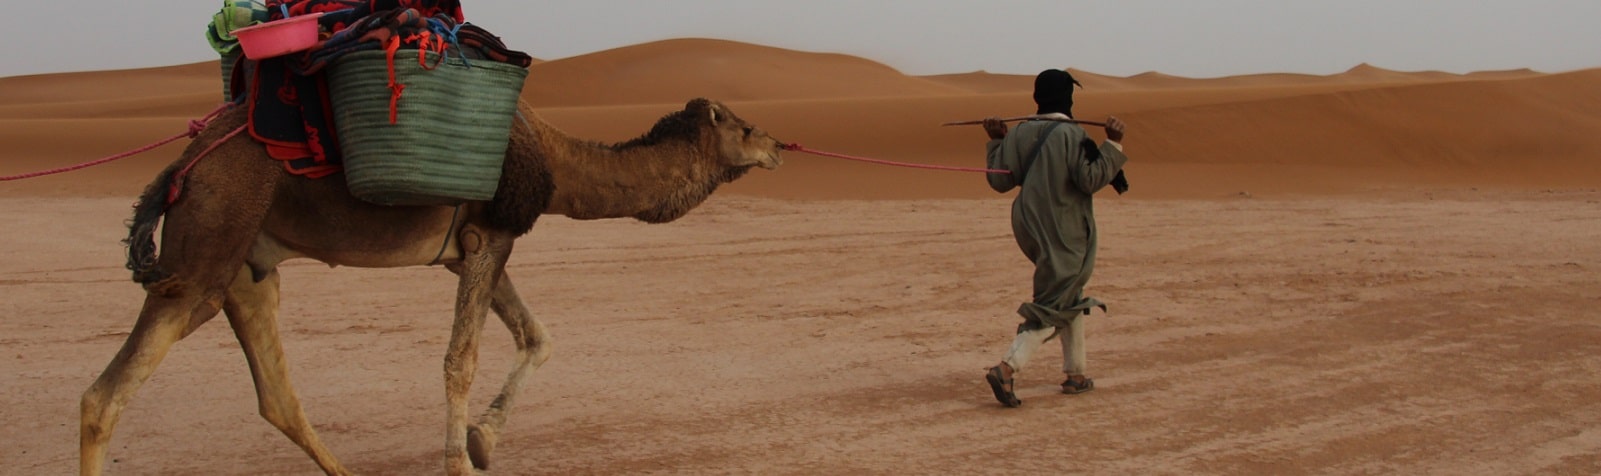 camel trek morocco 3 days